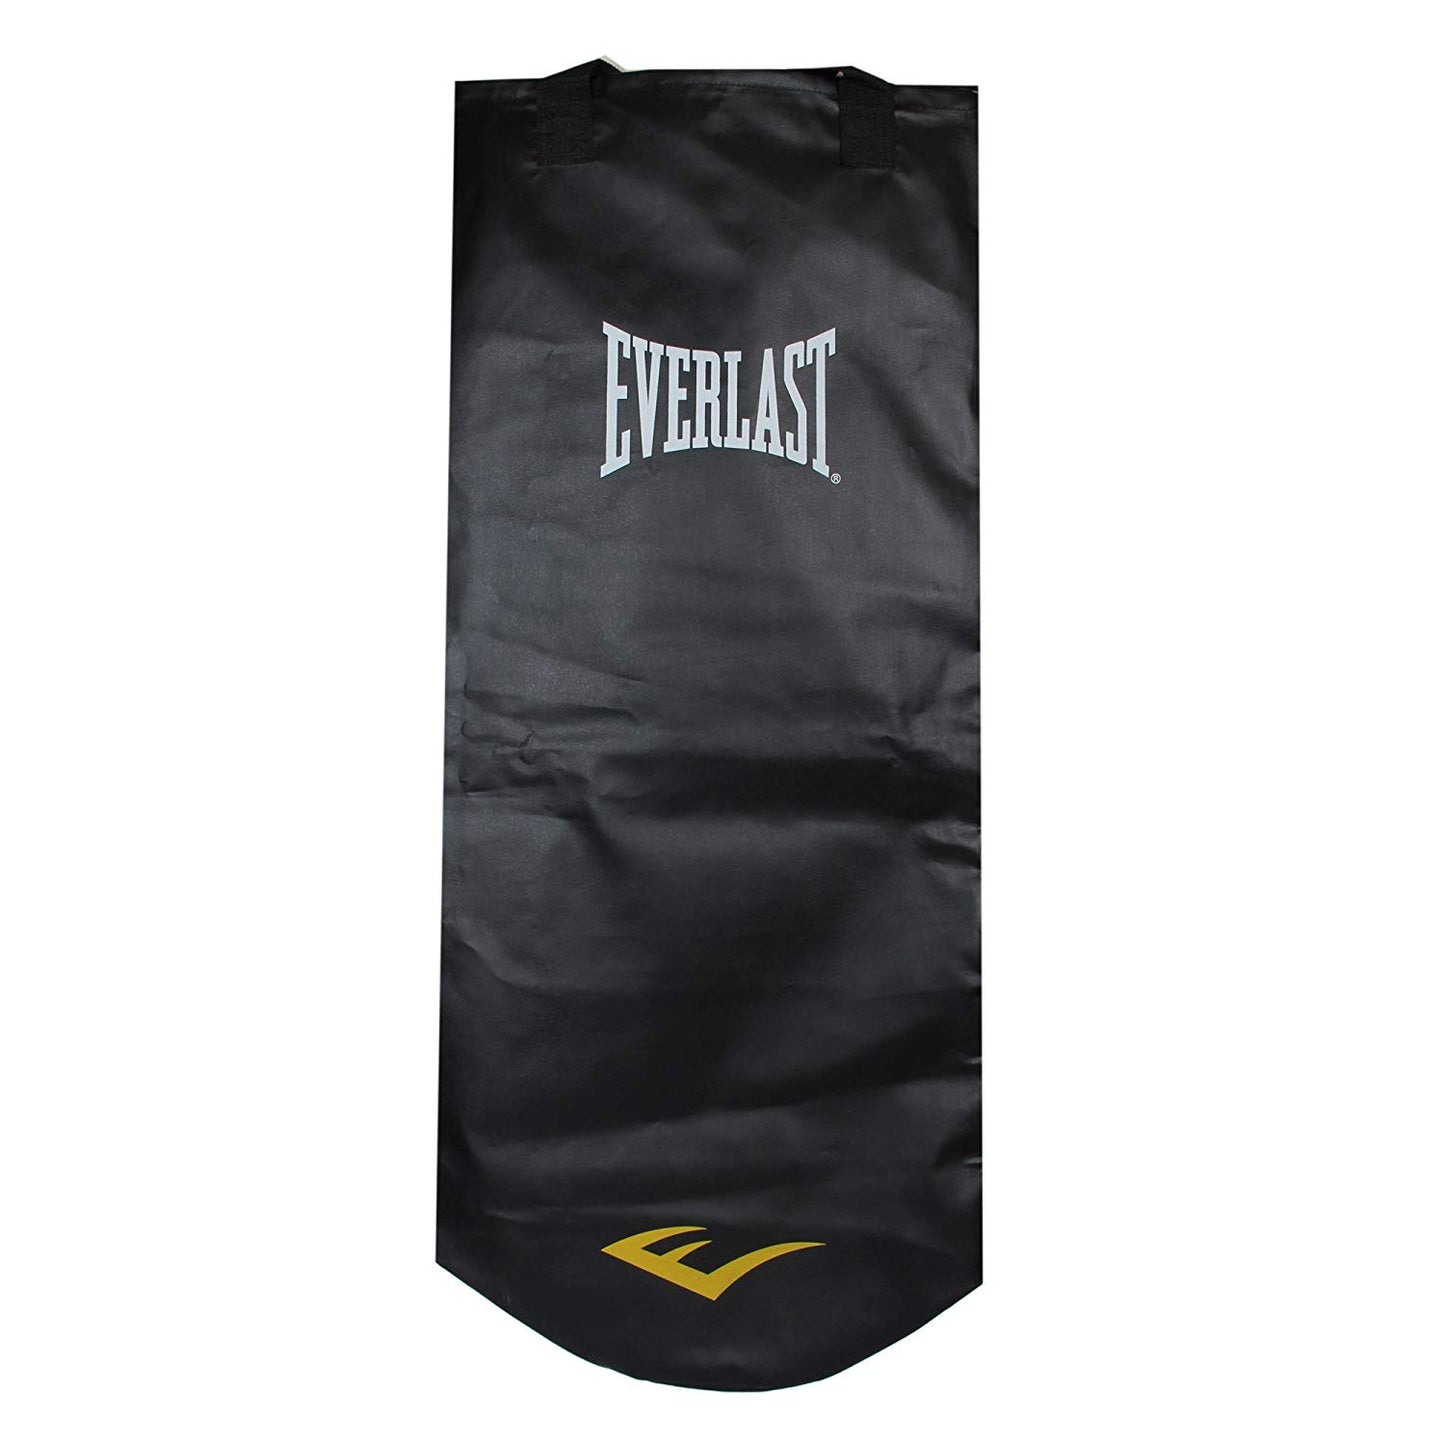 Everlast SH4000WB Nevatear Heavy Bag Shell (Black) - Best Price online Prokicksports.com